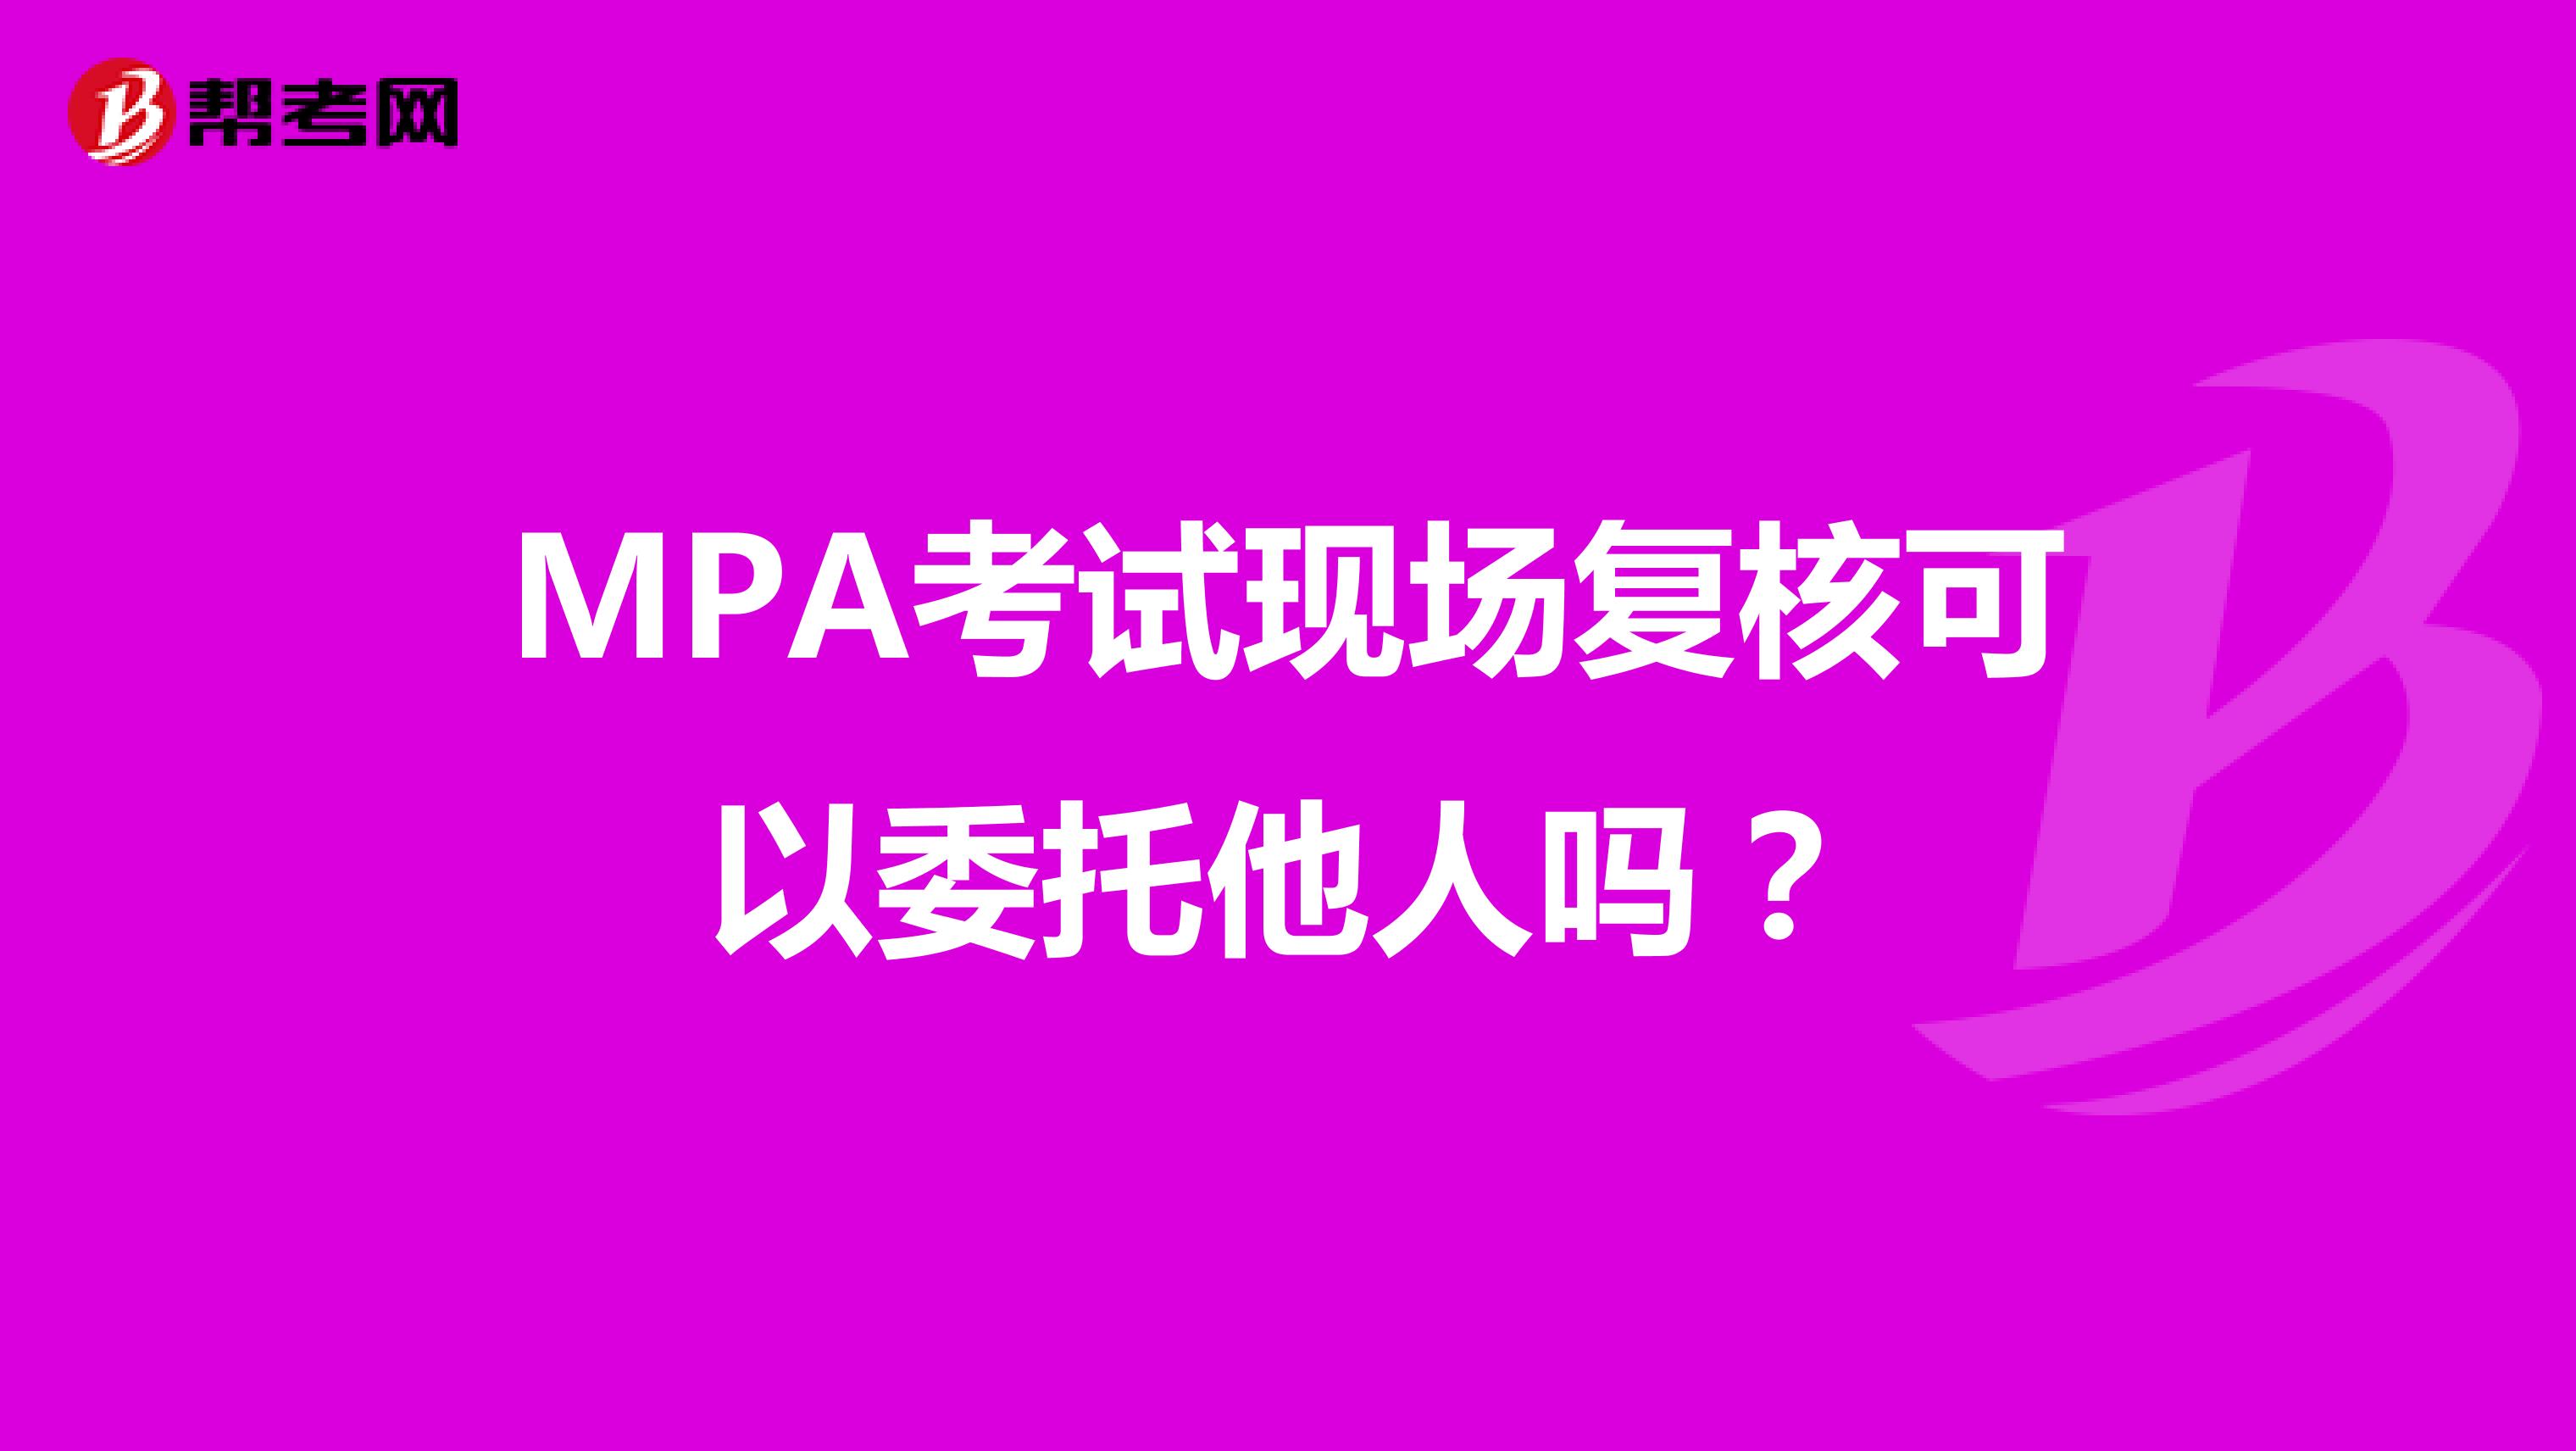 MPA考试现场复核可以委托他人吗？